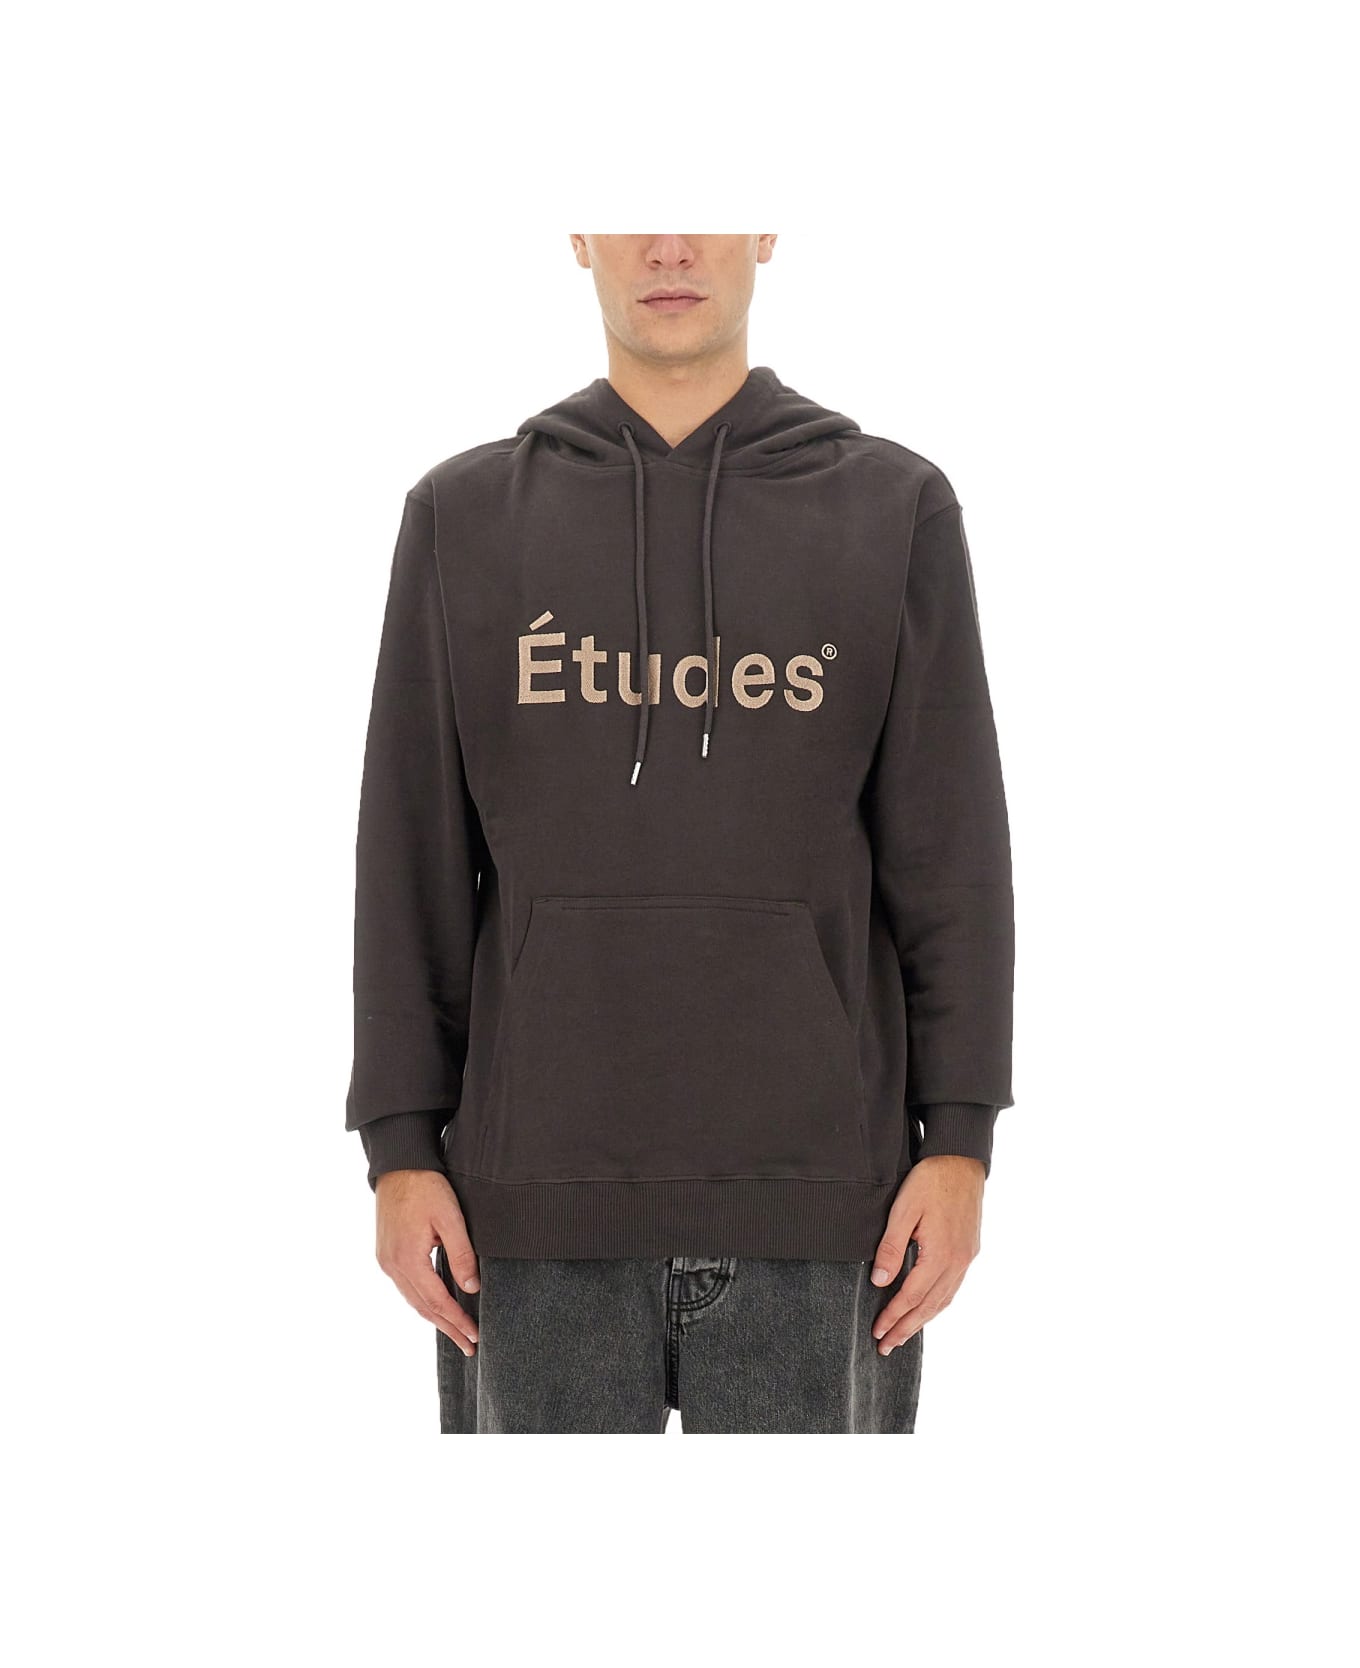 Études Sweatshirt With Logo - BROWN